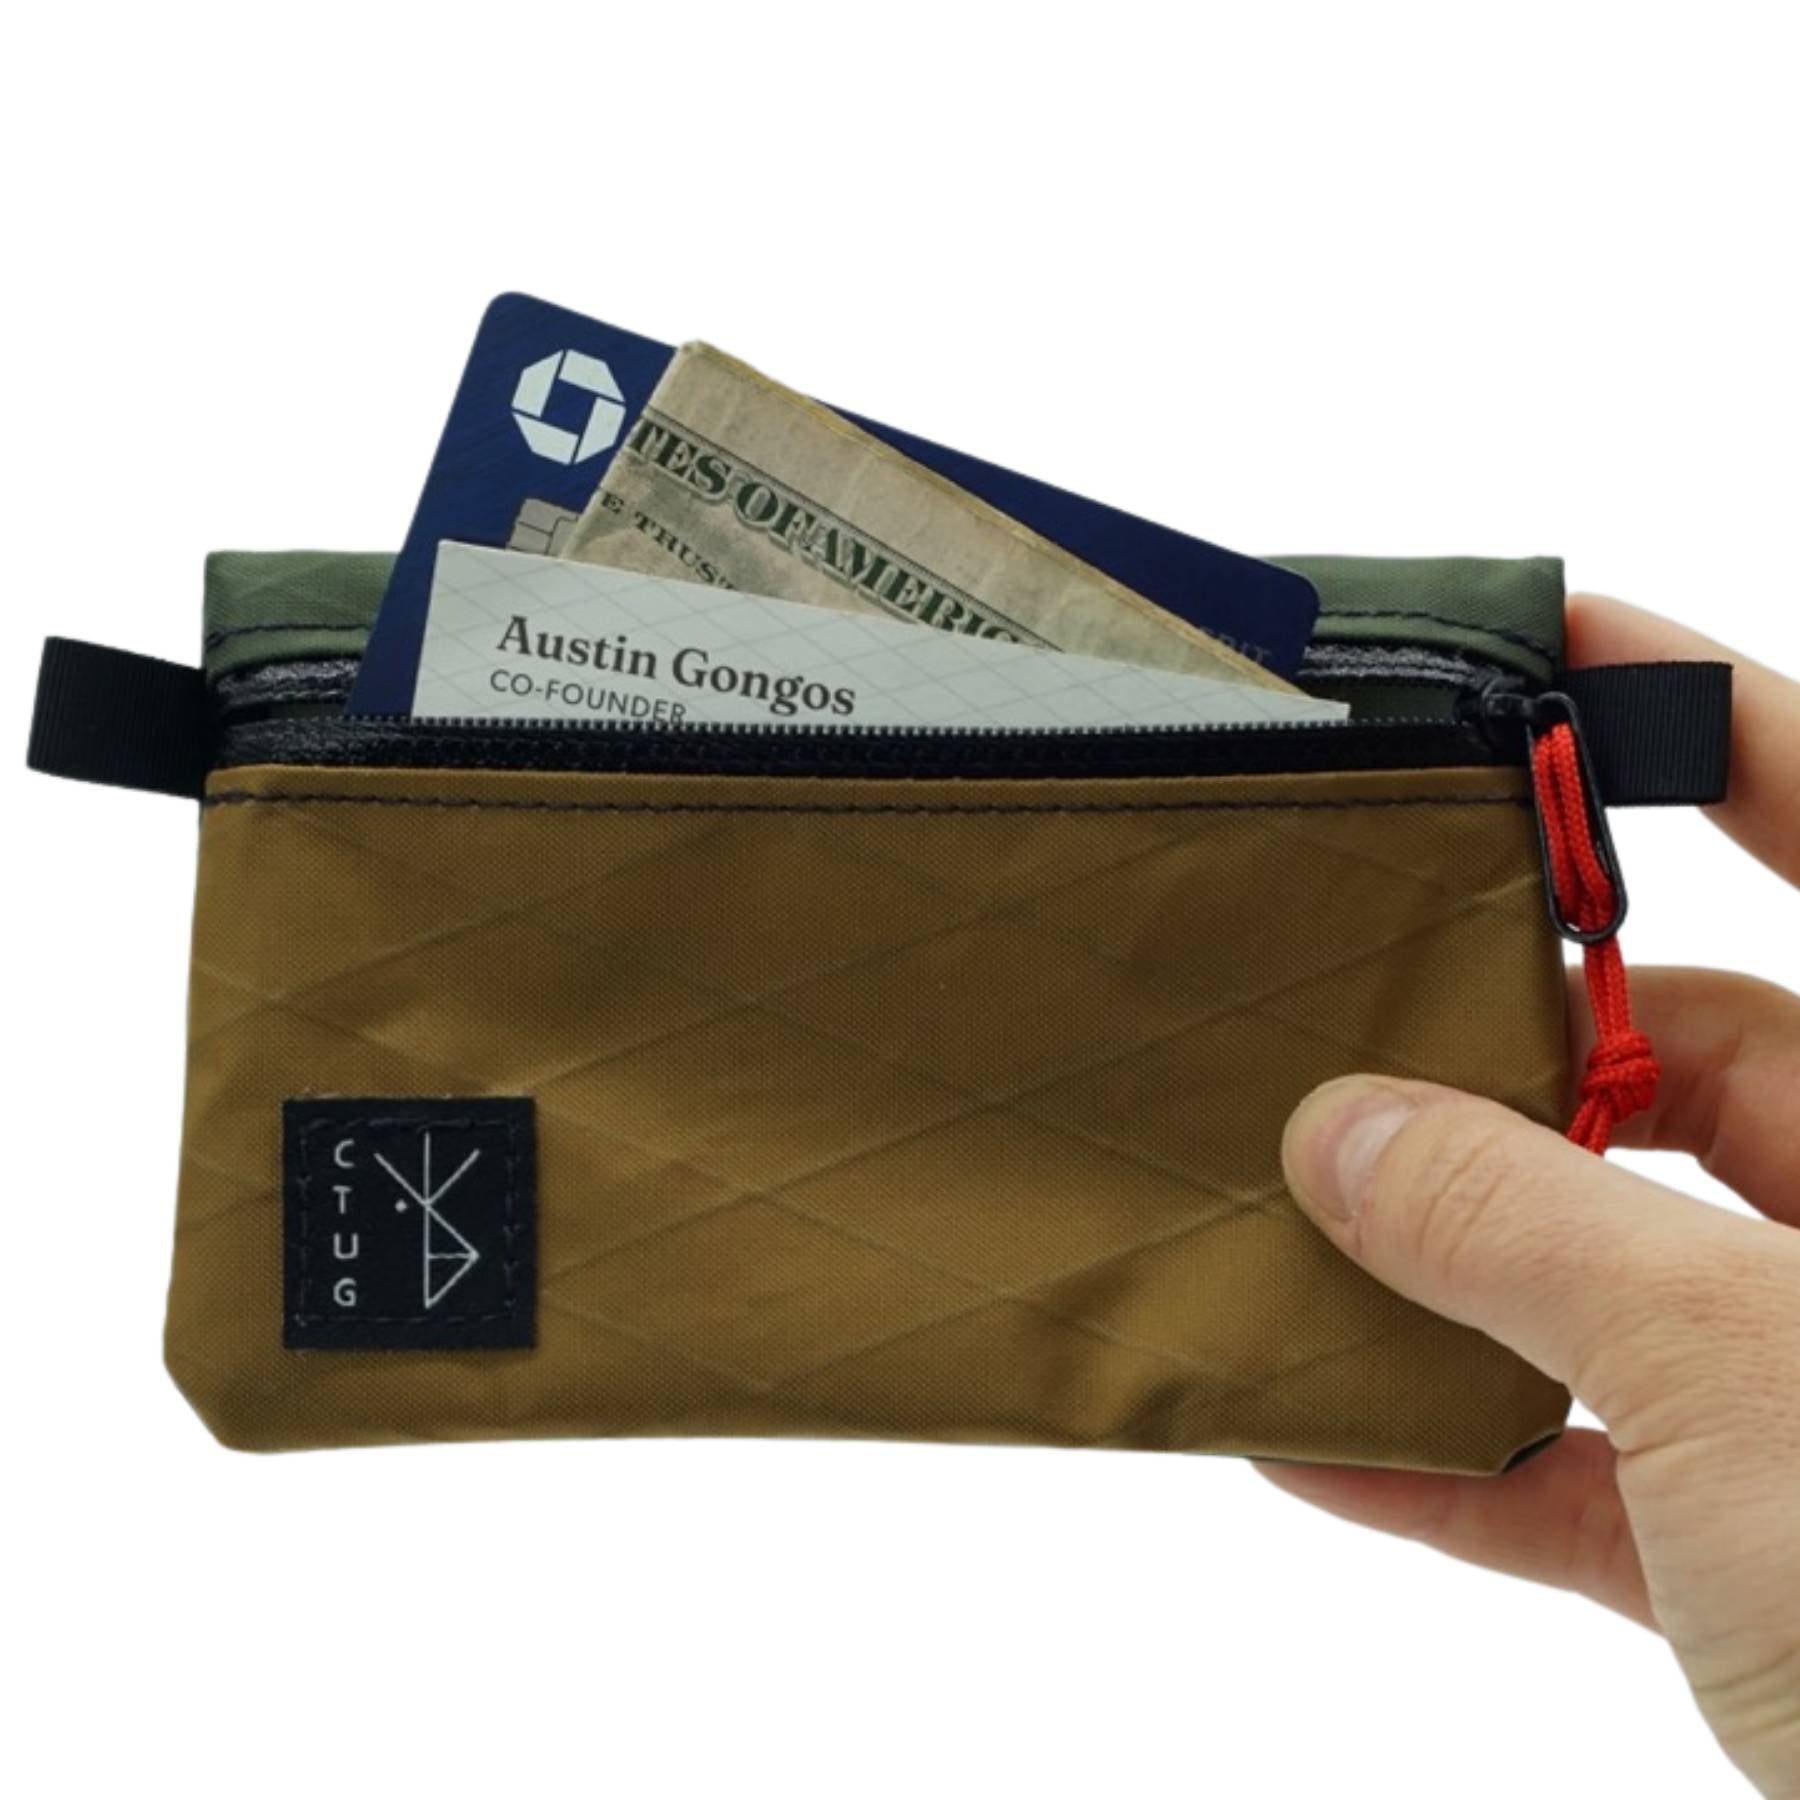 Nomad Card Wallet - Urban Kit Supply